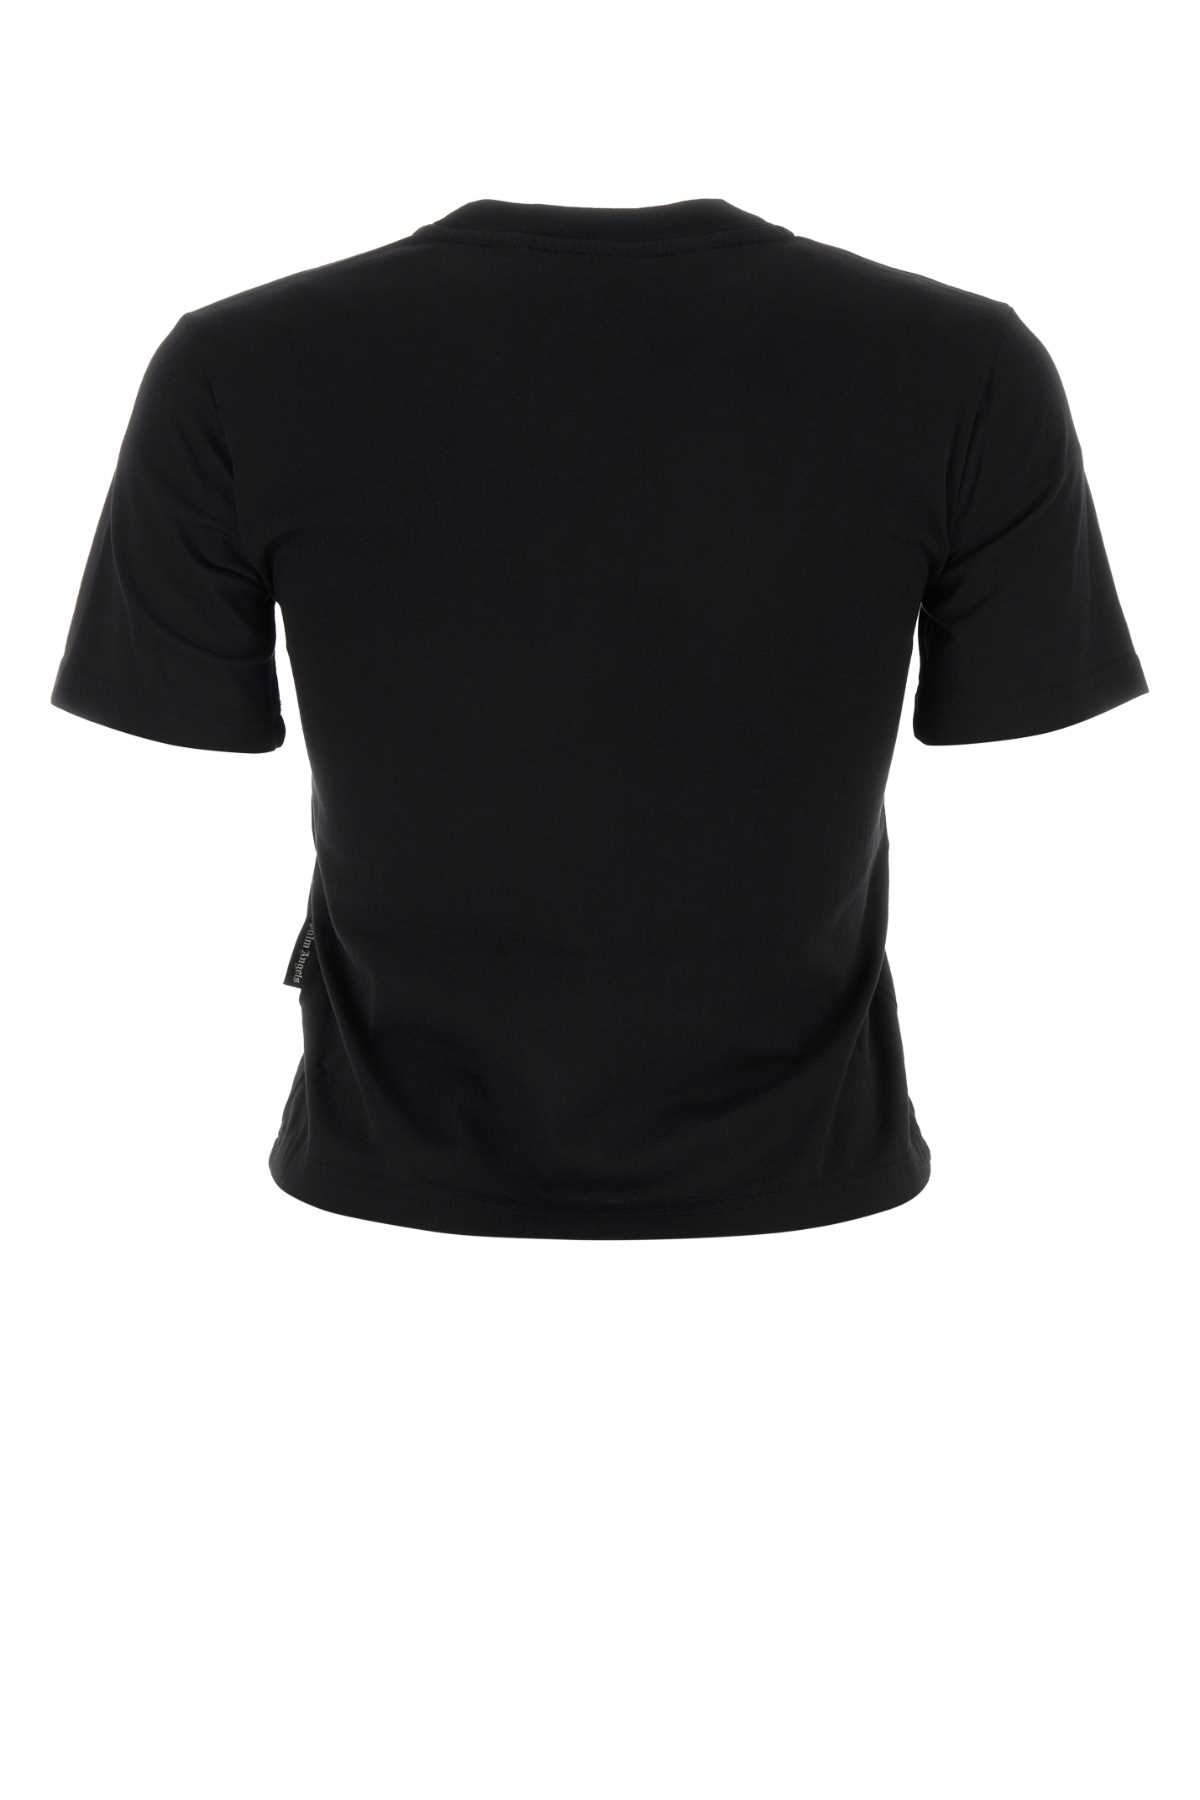 Palm Angels Black Cotton T-shirt In Blackblack